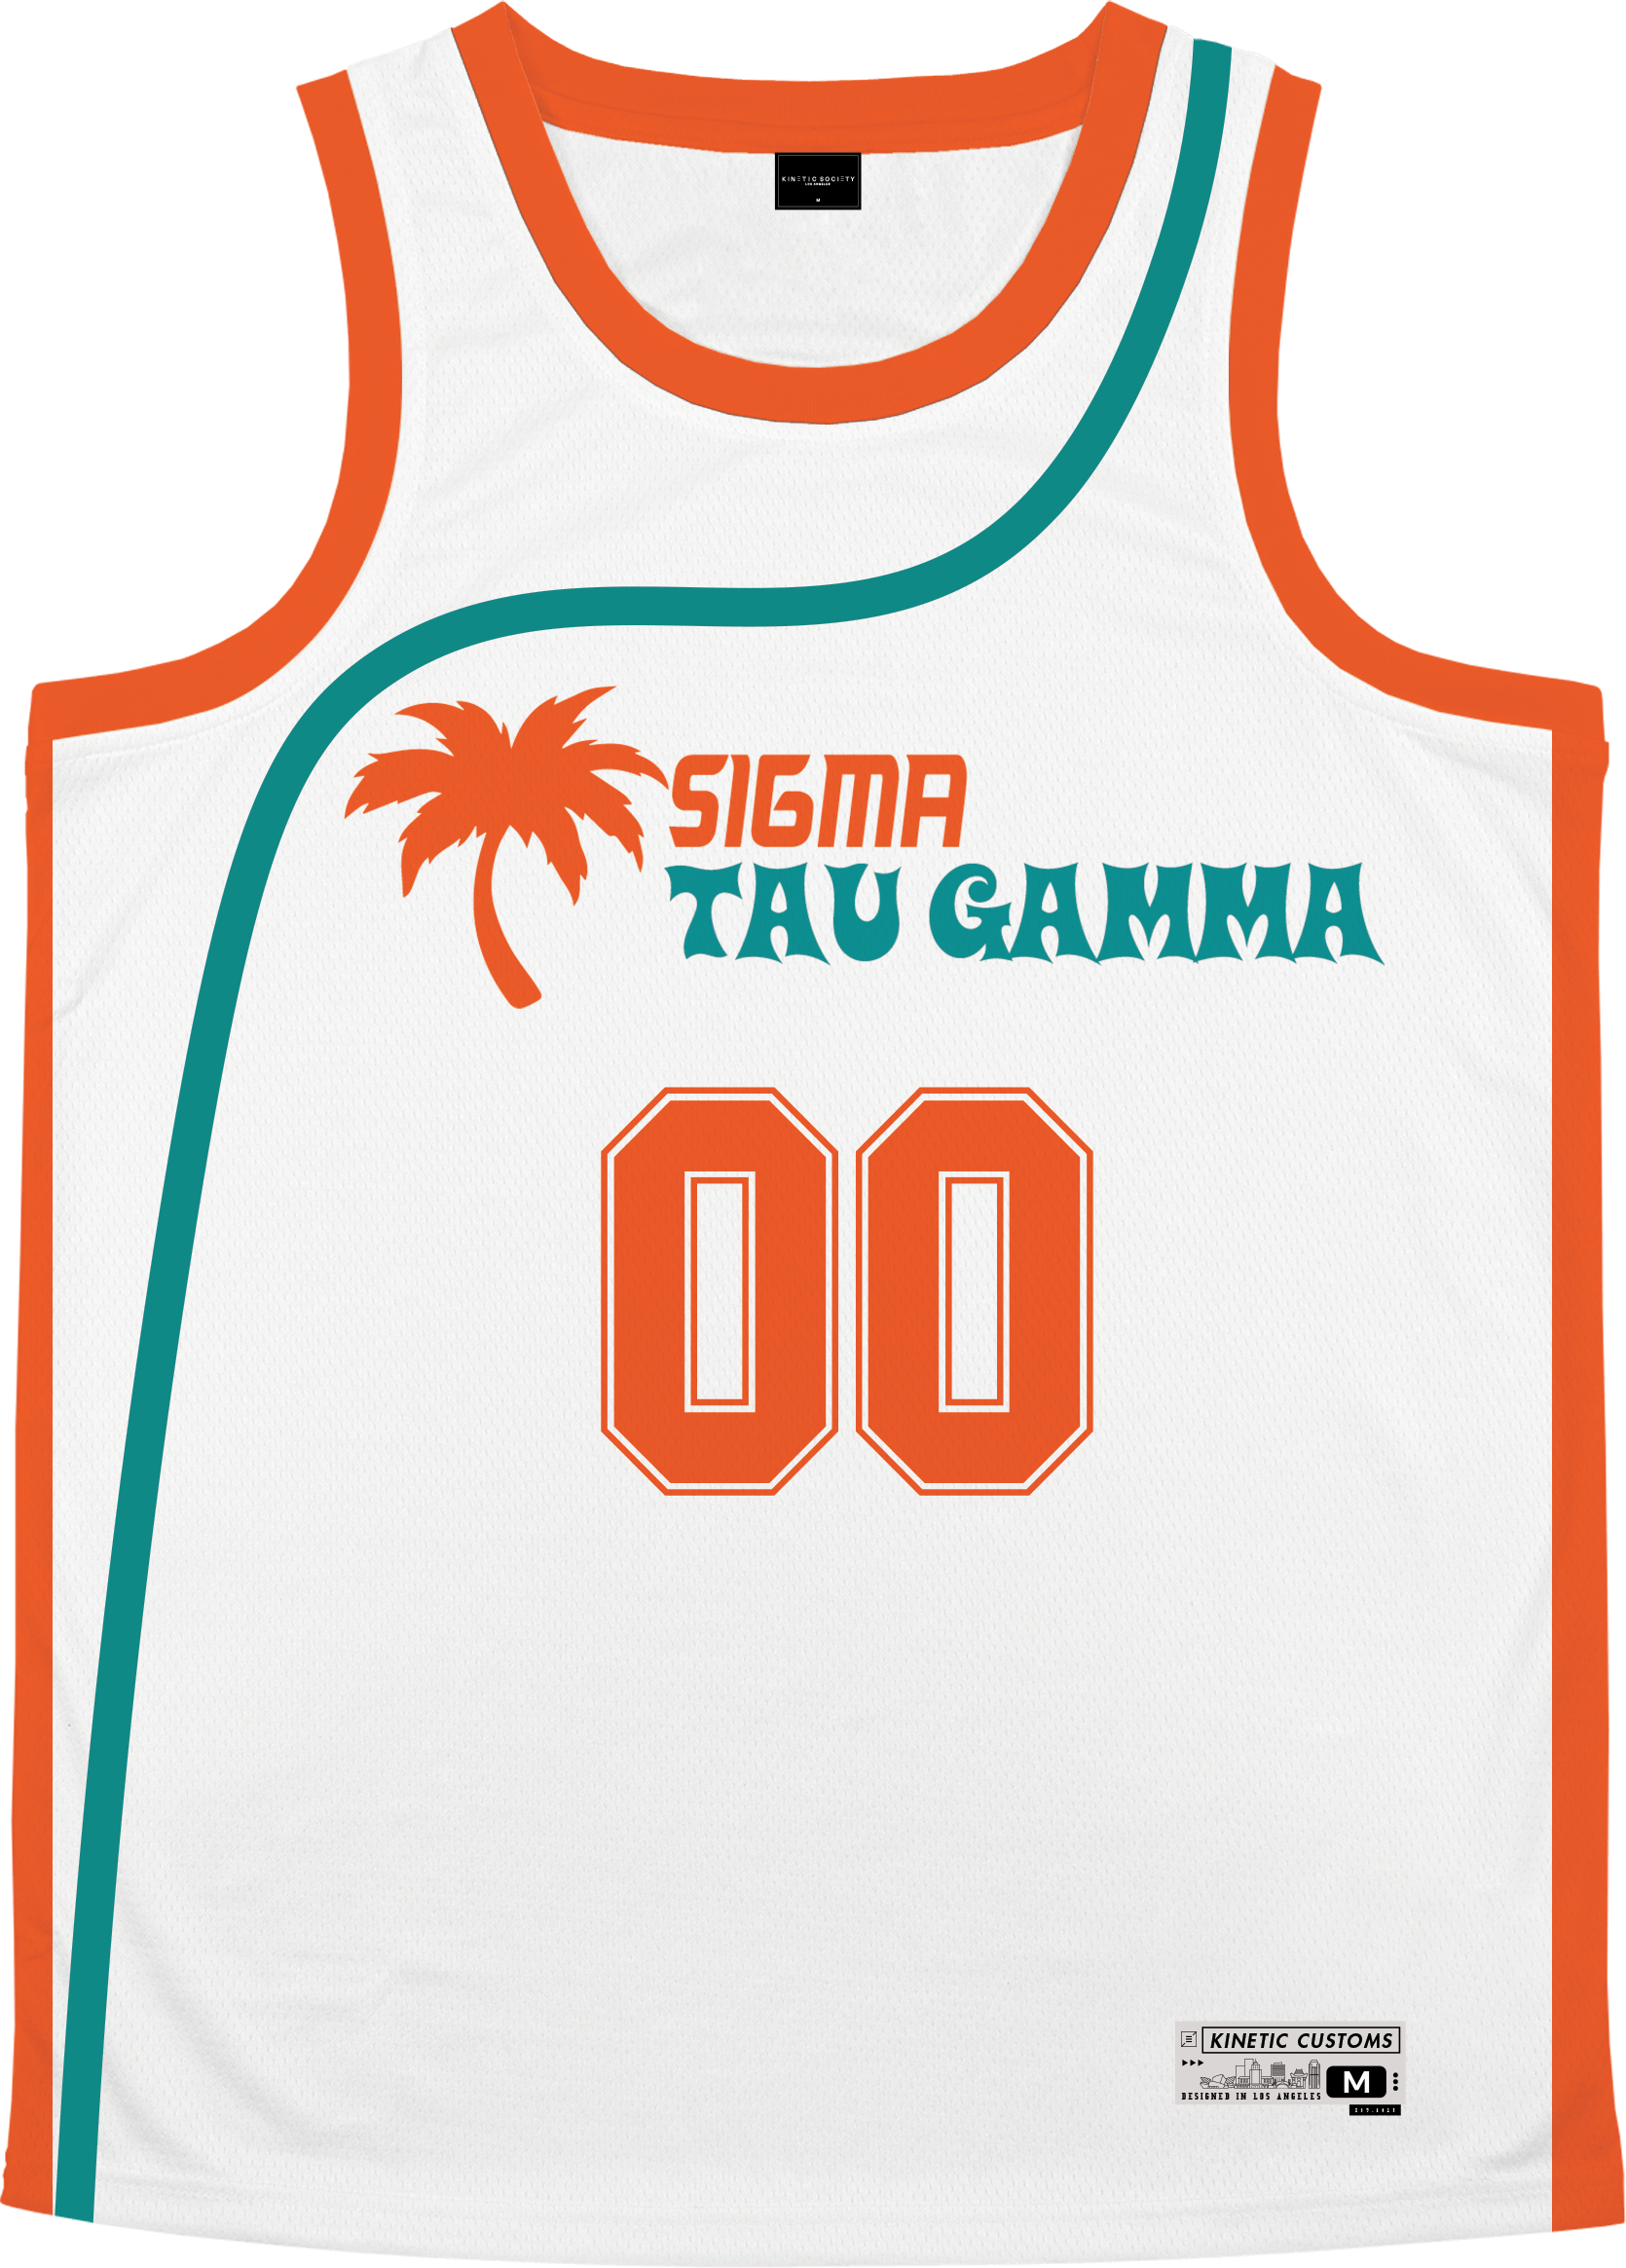 Sigma Tau Gamma - Tropical Basketball Jersey Premium Basketball Kinetic Society LLC 